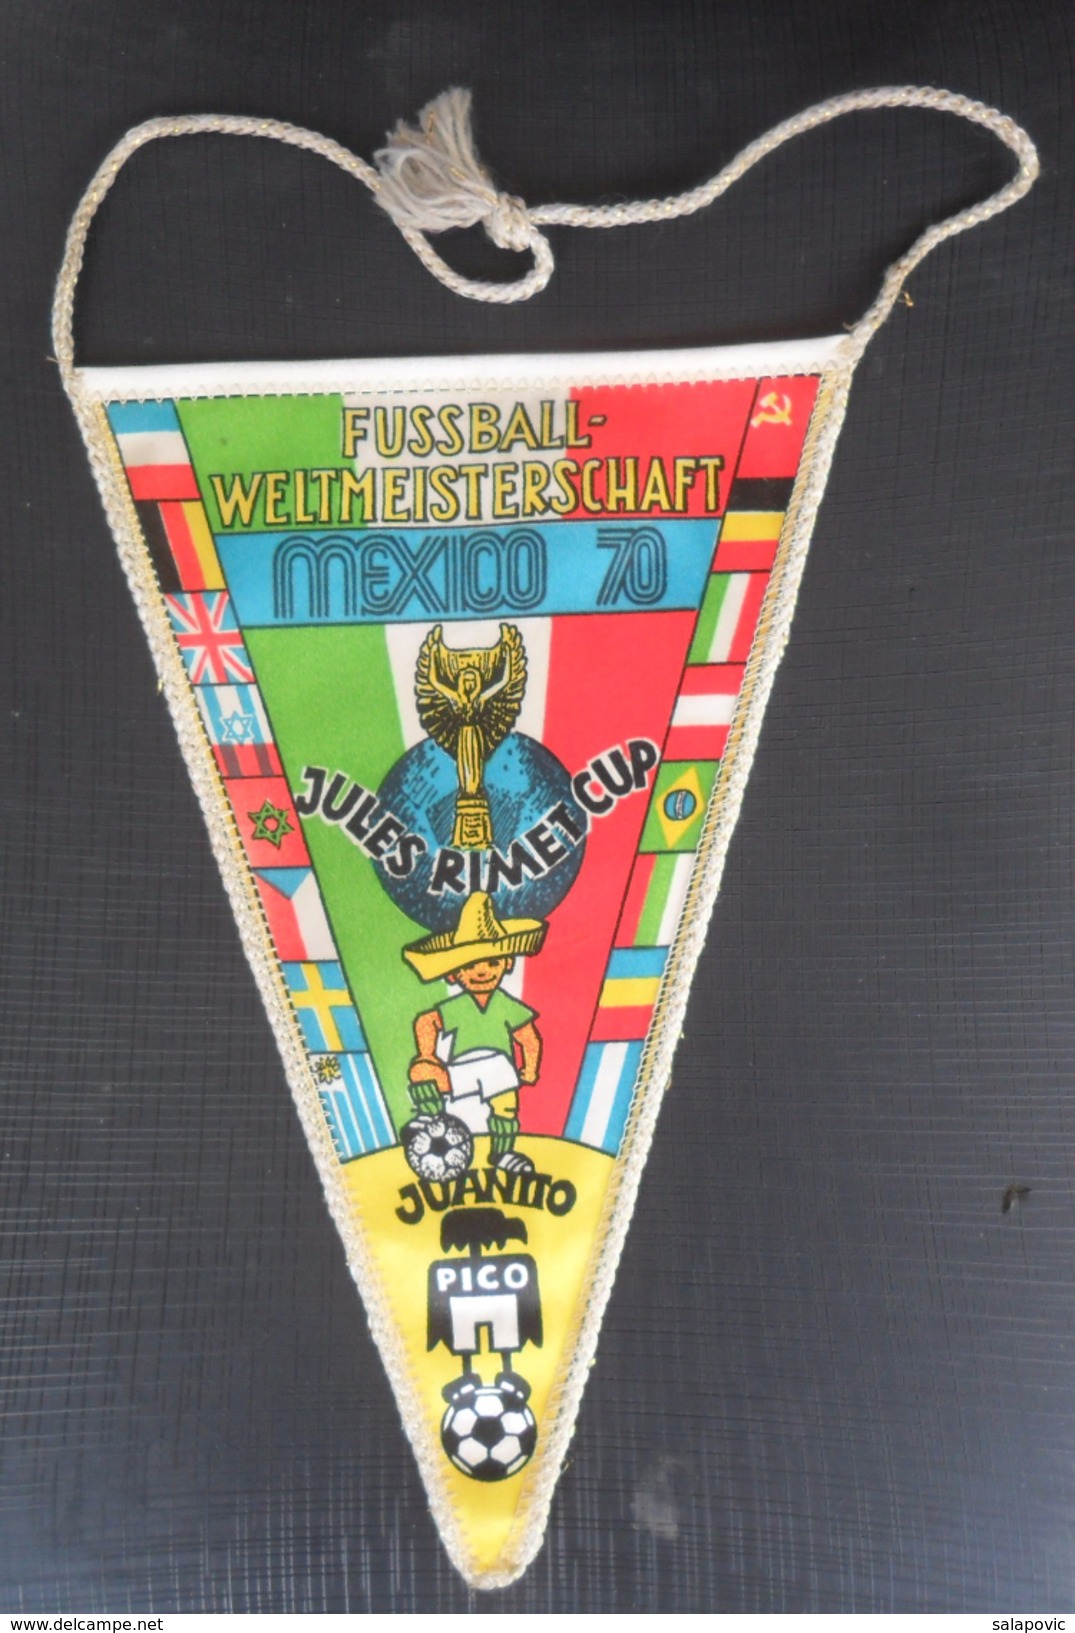 Fußball-Weltmeisterschaft 1970 Mexico,  FIFA World Cup  FOOTBALL CLUB SOCCER / FUTBOL / CALCIO, OLD PENNANT, SPORTS FLAG - Bekleidung, Souvenirs Und Sonstige